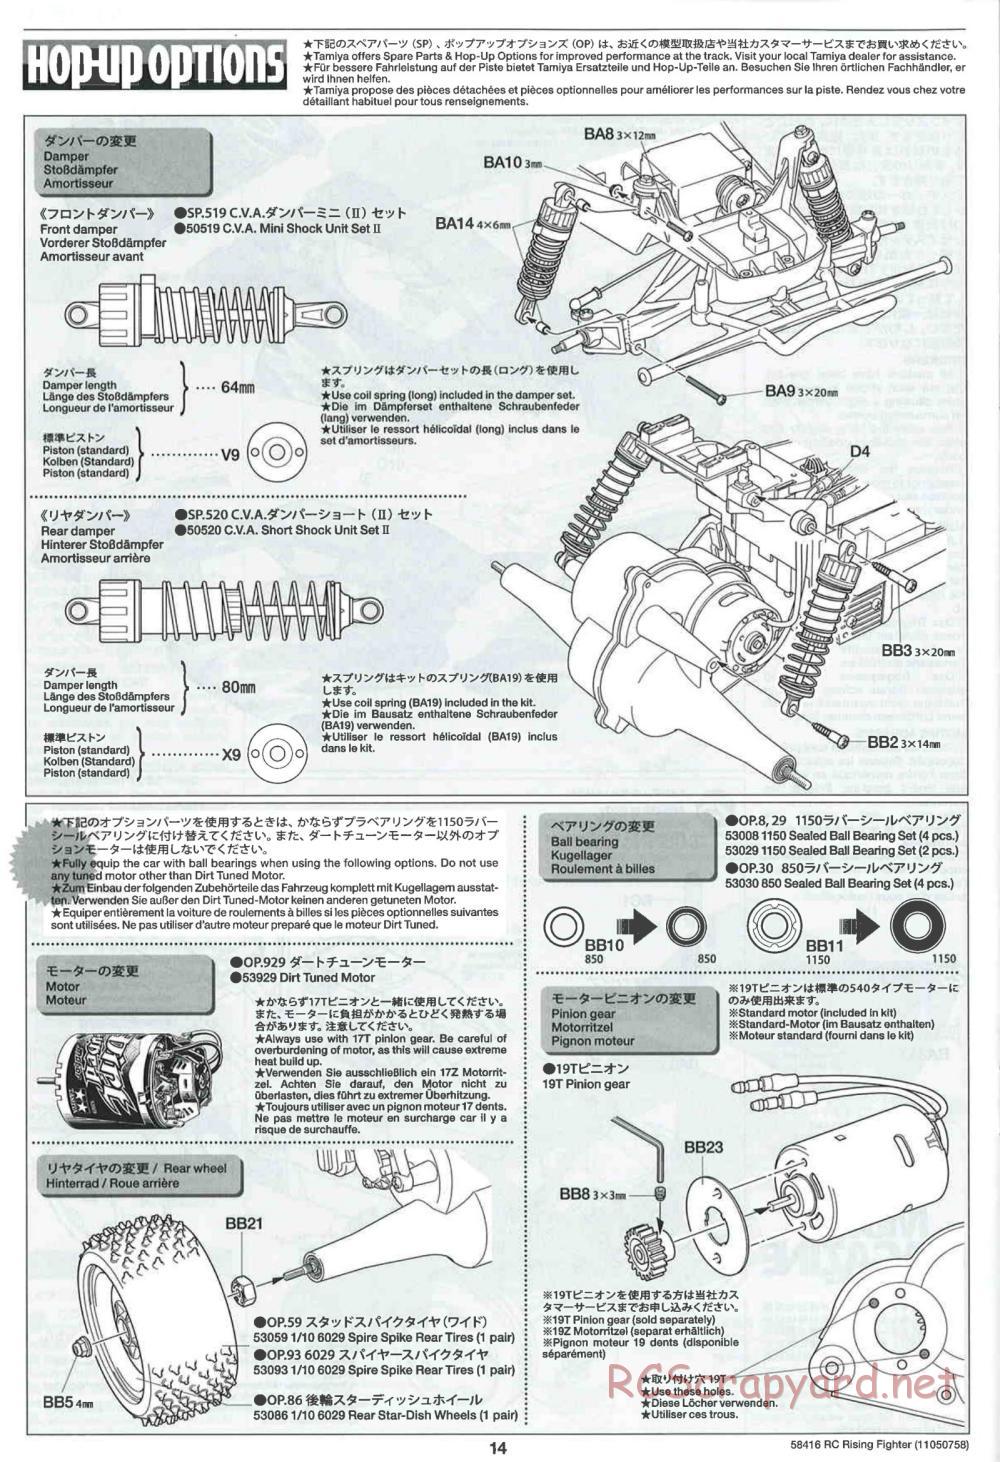 Tamiya - Rising Fighter Chassis - Manual - Page 14